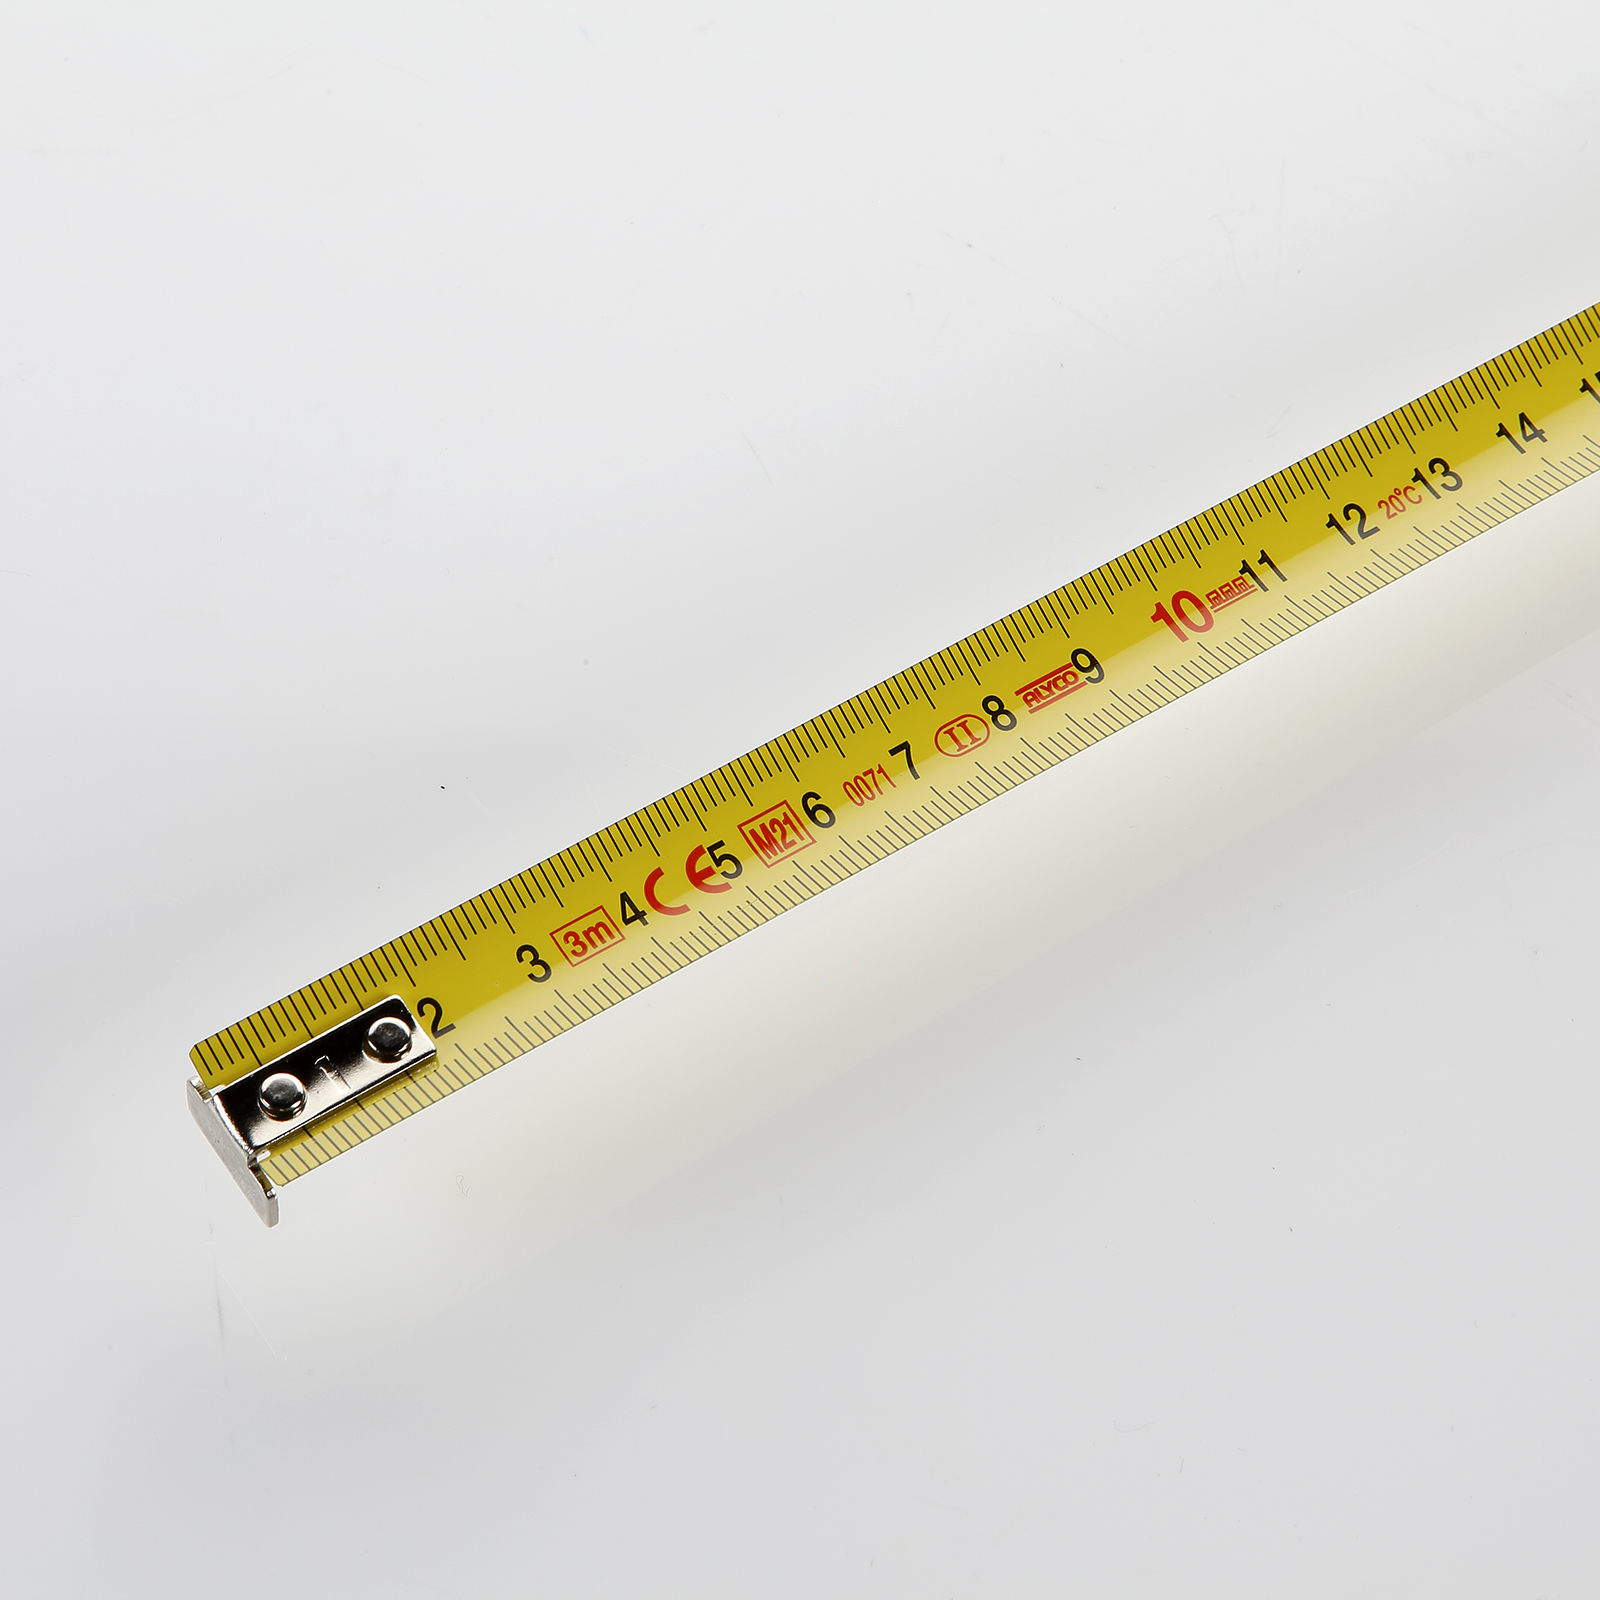 Hemico Body Measure Tape, For Measurement at Rs 27/piece in Surat